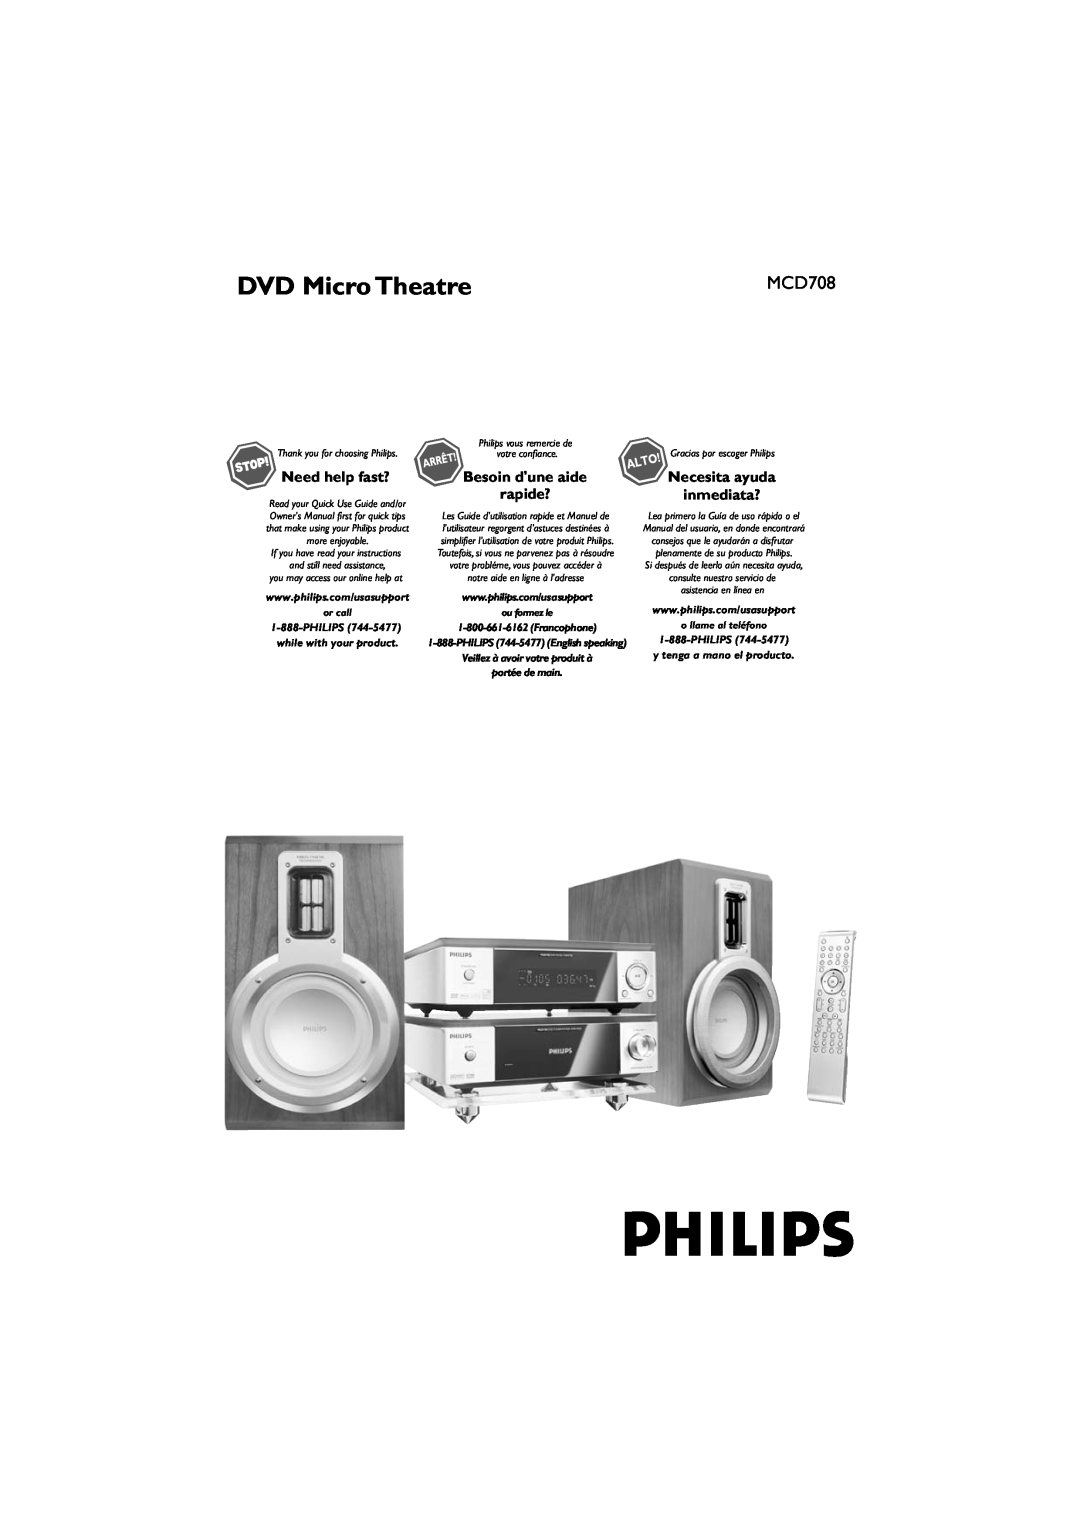 Philips MCD708 owner manual DVD Micro Theatre, Necesita ayuda inmediata?, Need help fast?, Besoin dune aide, rapide? 